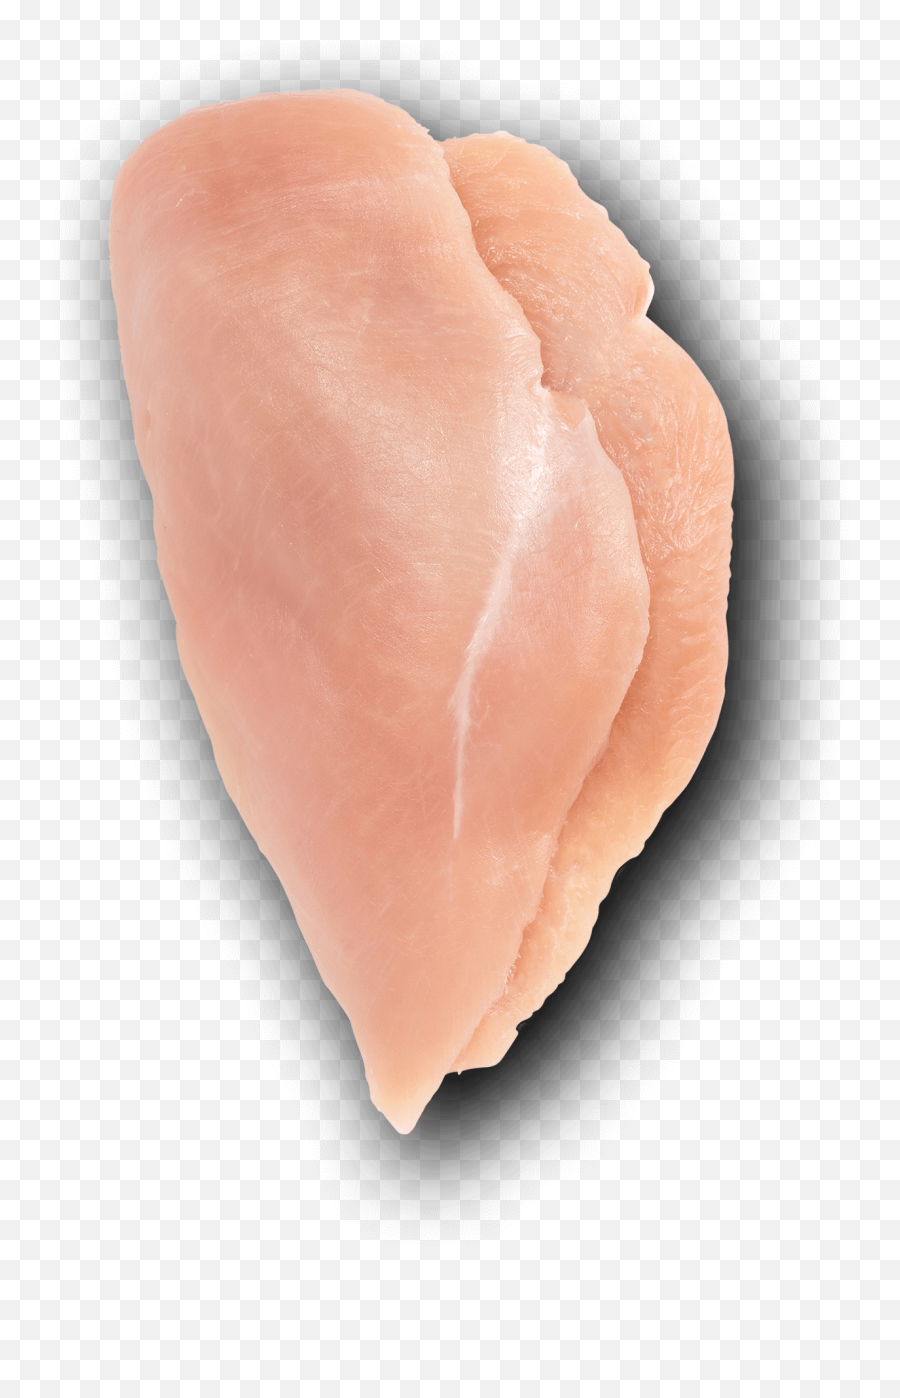 Buy Perdue Boneless Skinless Chicken - One Chicken Breast Png,Chicken Breast Png